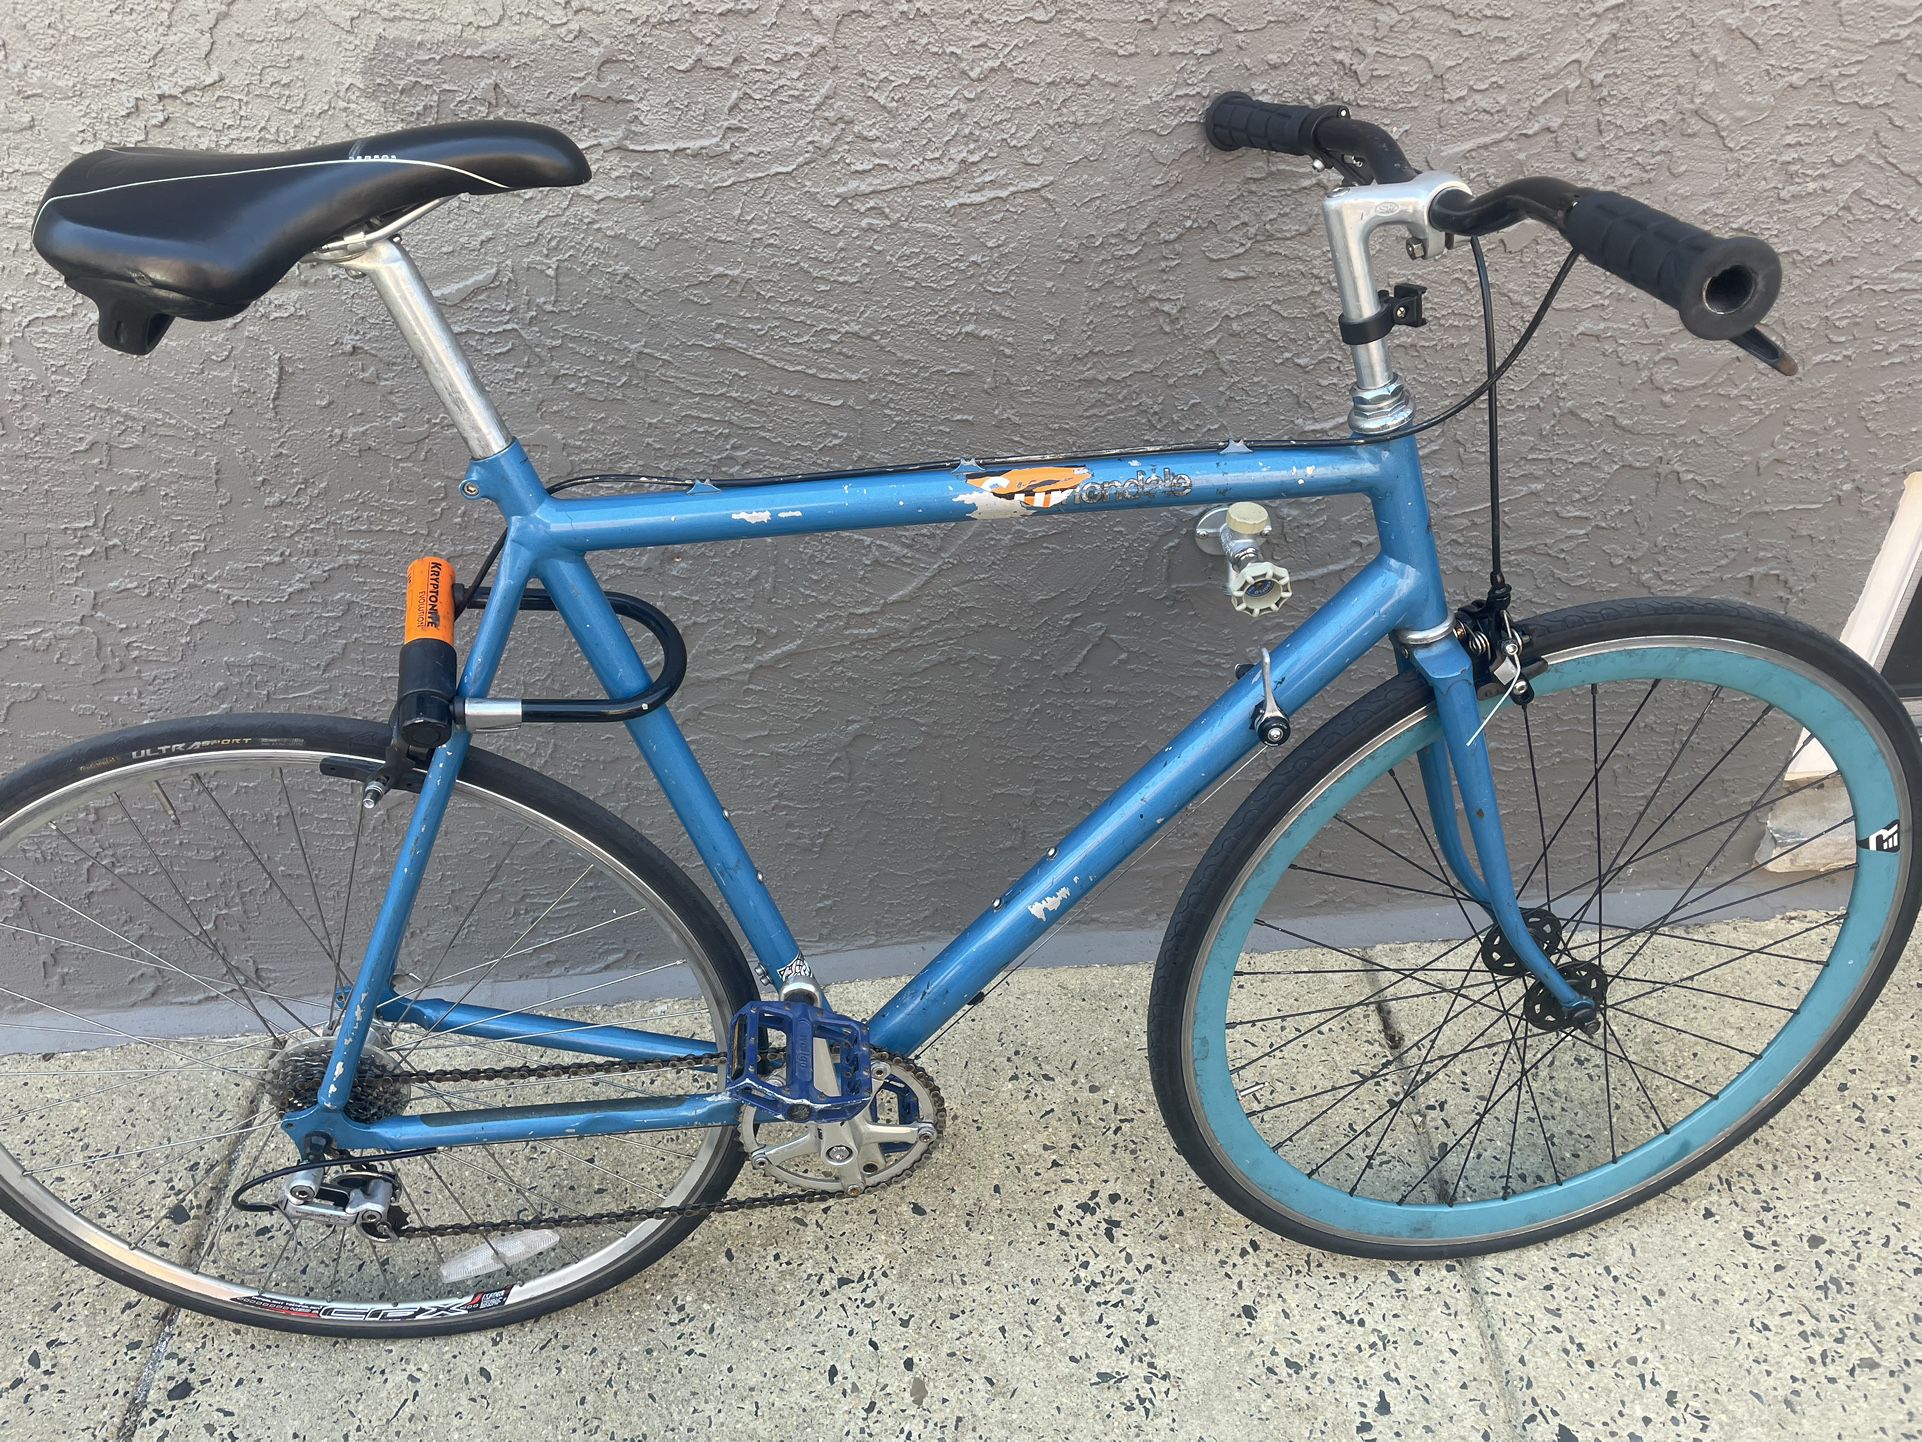 Cannondale City Bike Large Custom Build Lightweight 5’10-6’2